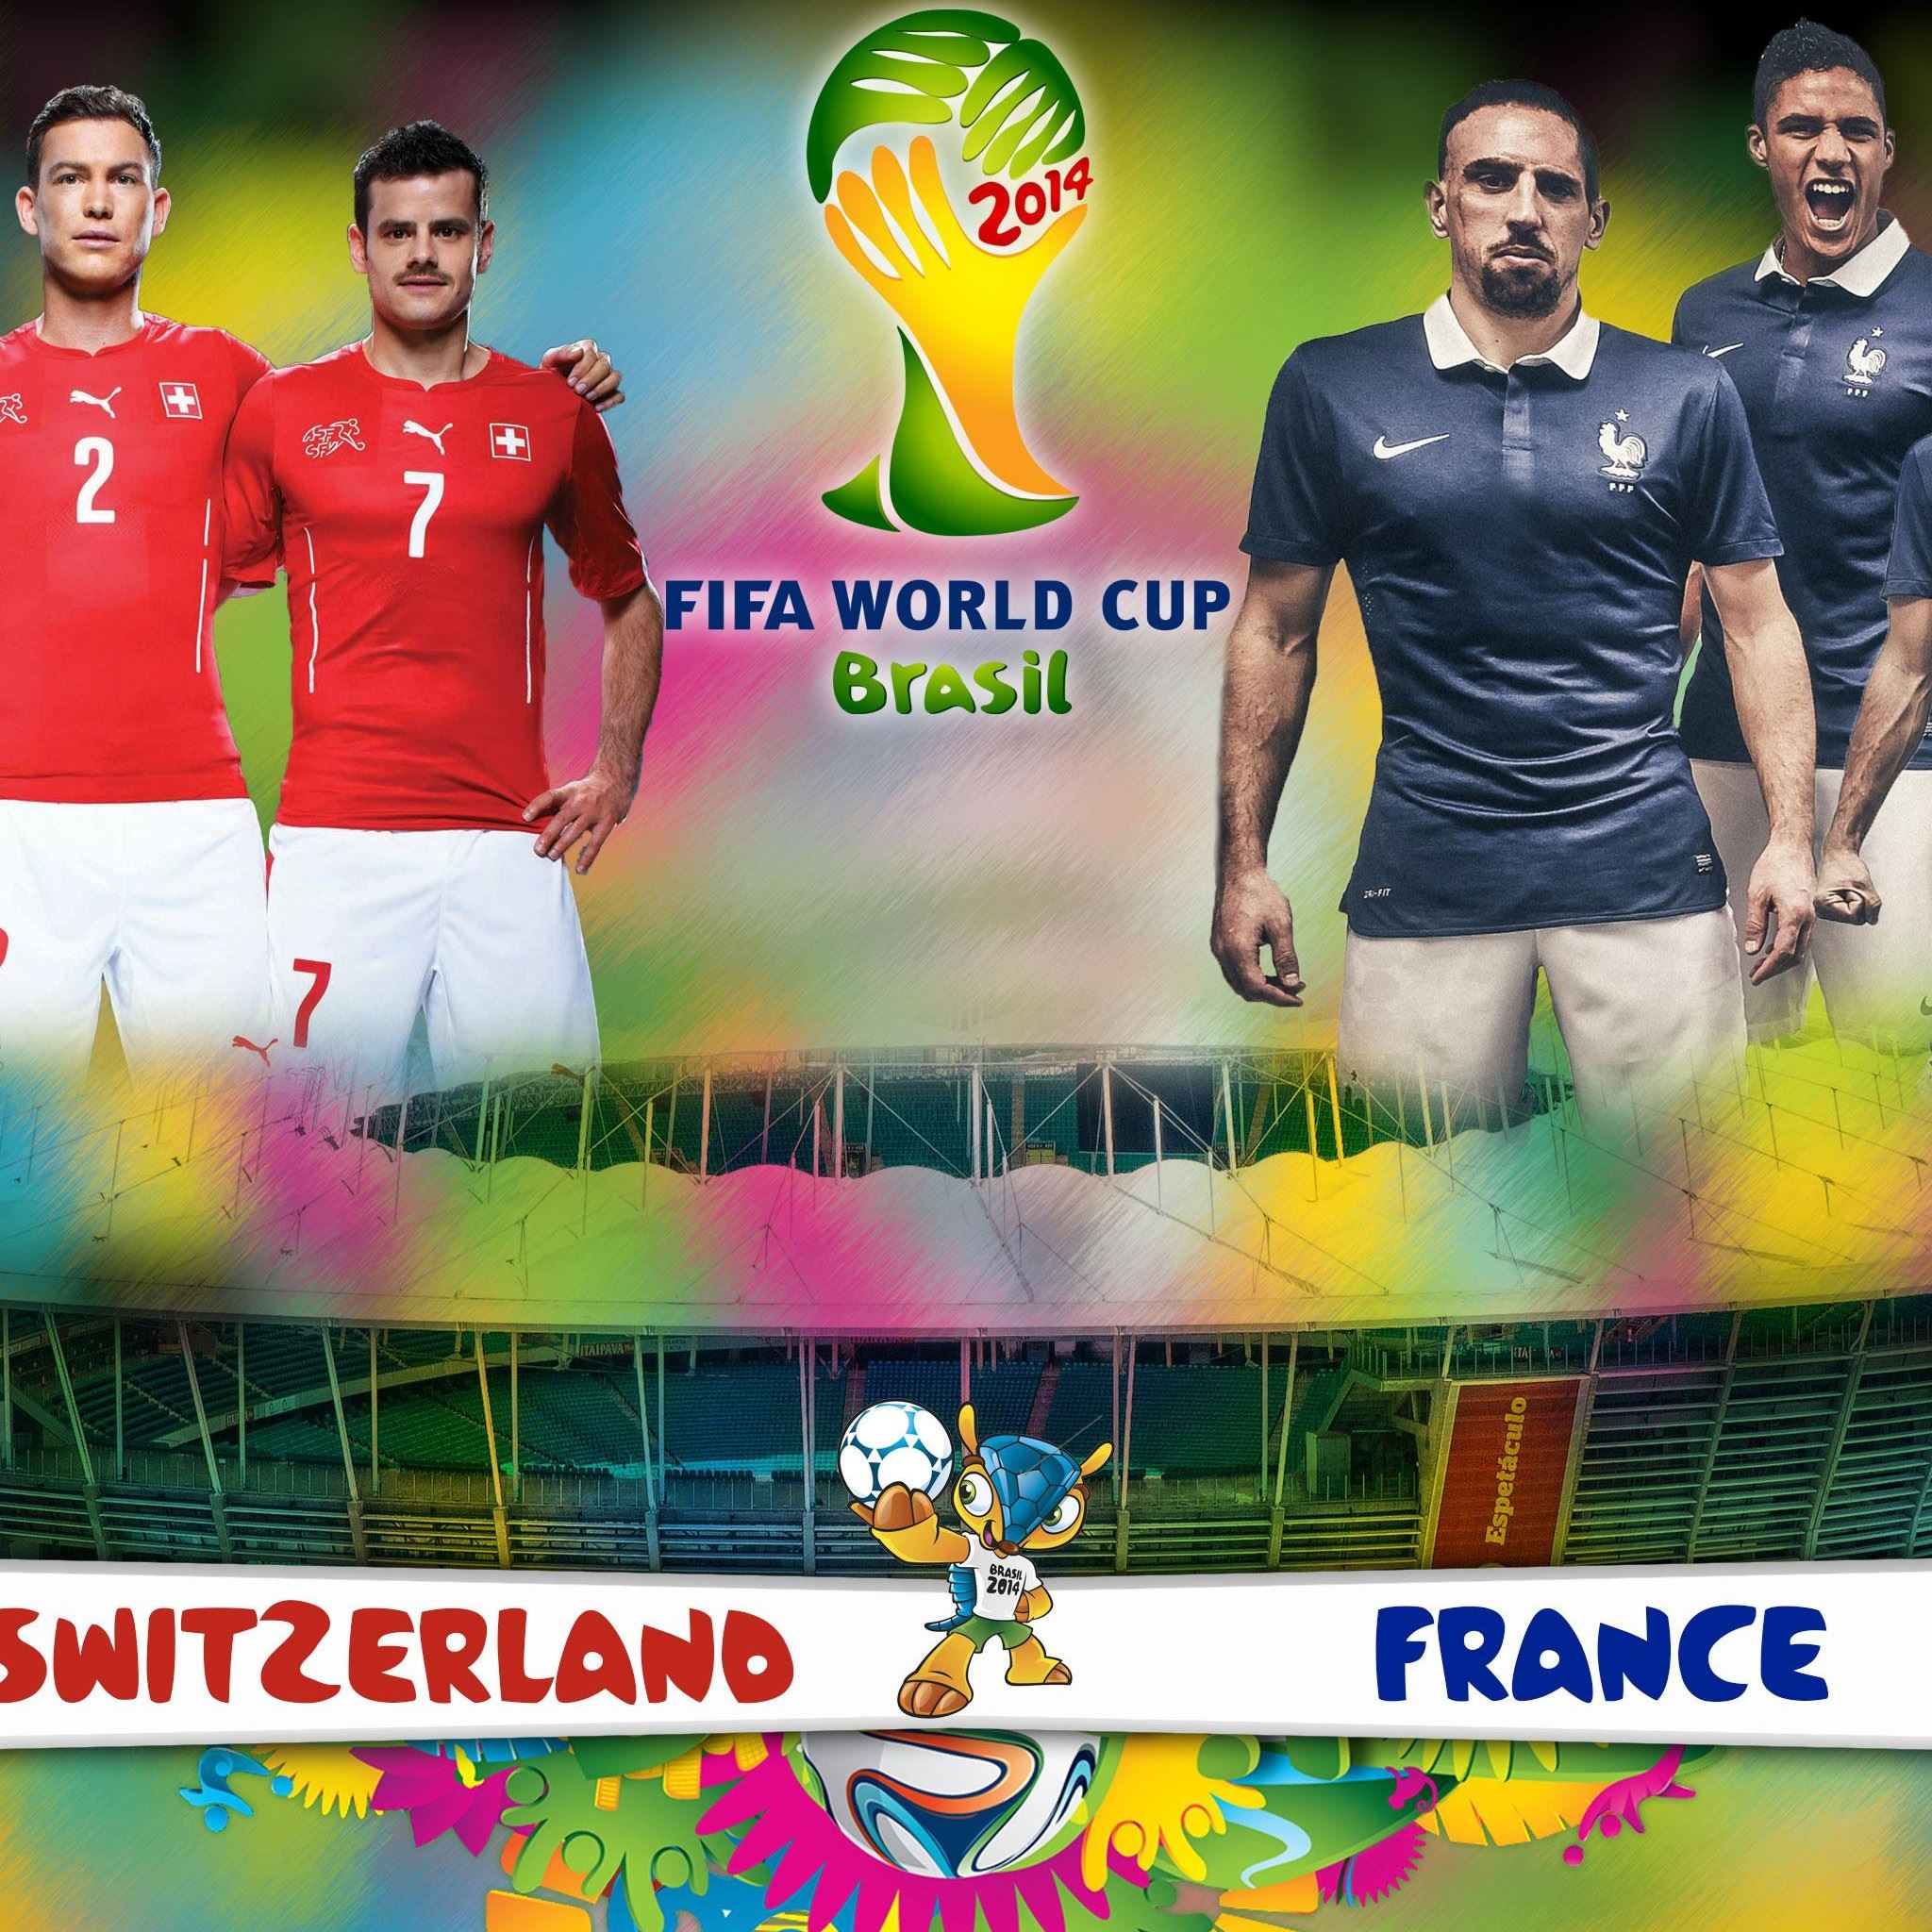 Switzerland Vs France 2014 World Cup Group E Football Match iPad Air wallpaper 